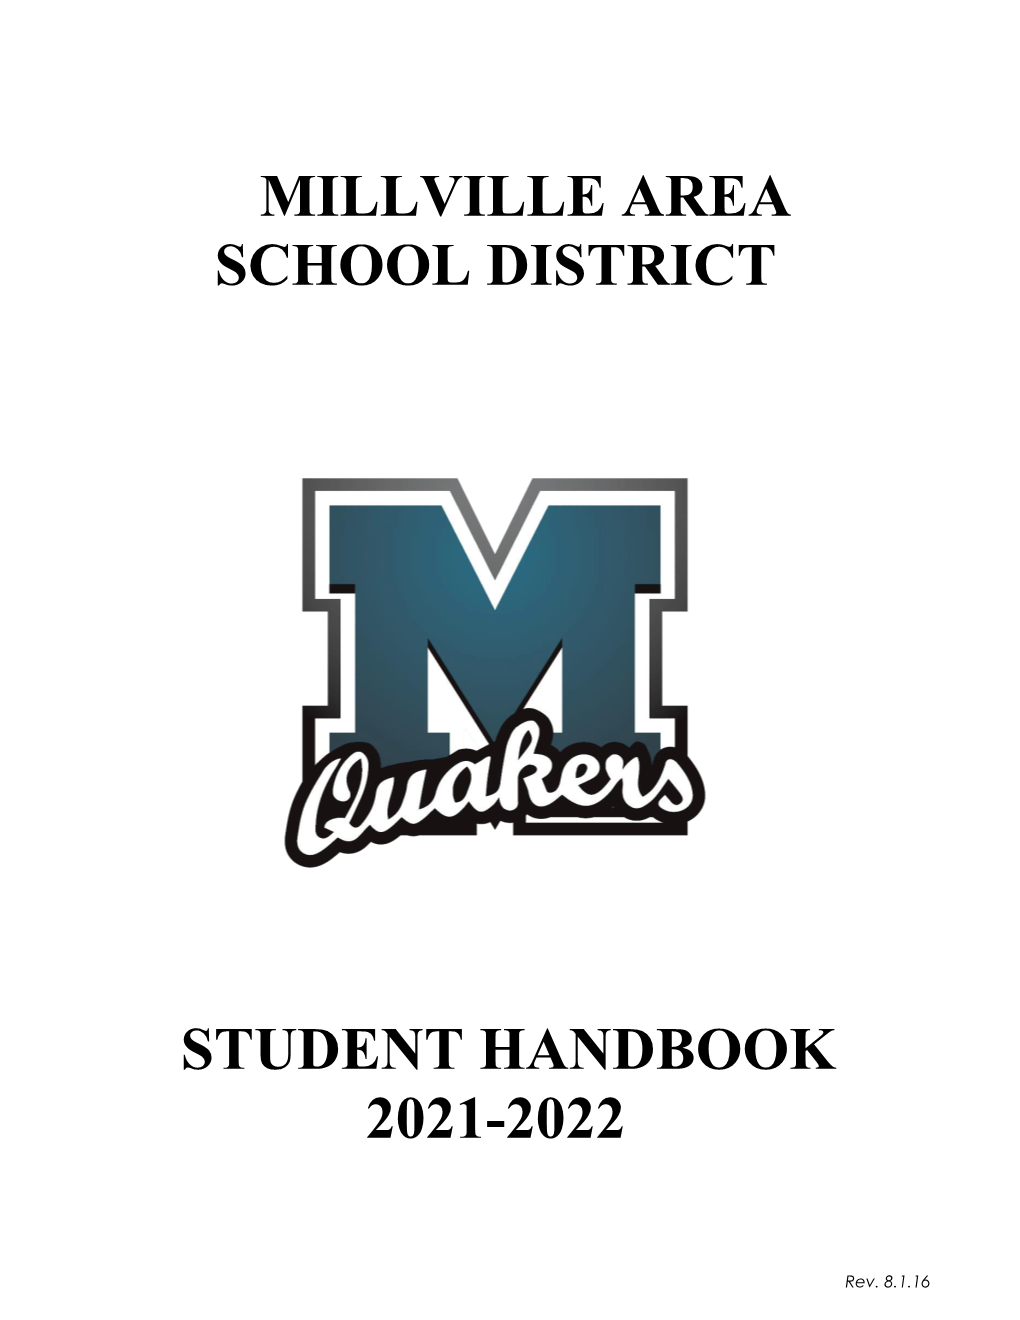 Millville Area School District Student Handbook 2021-2022